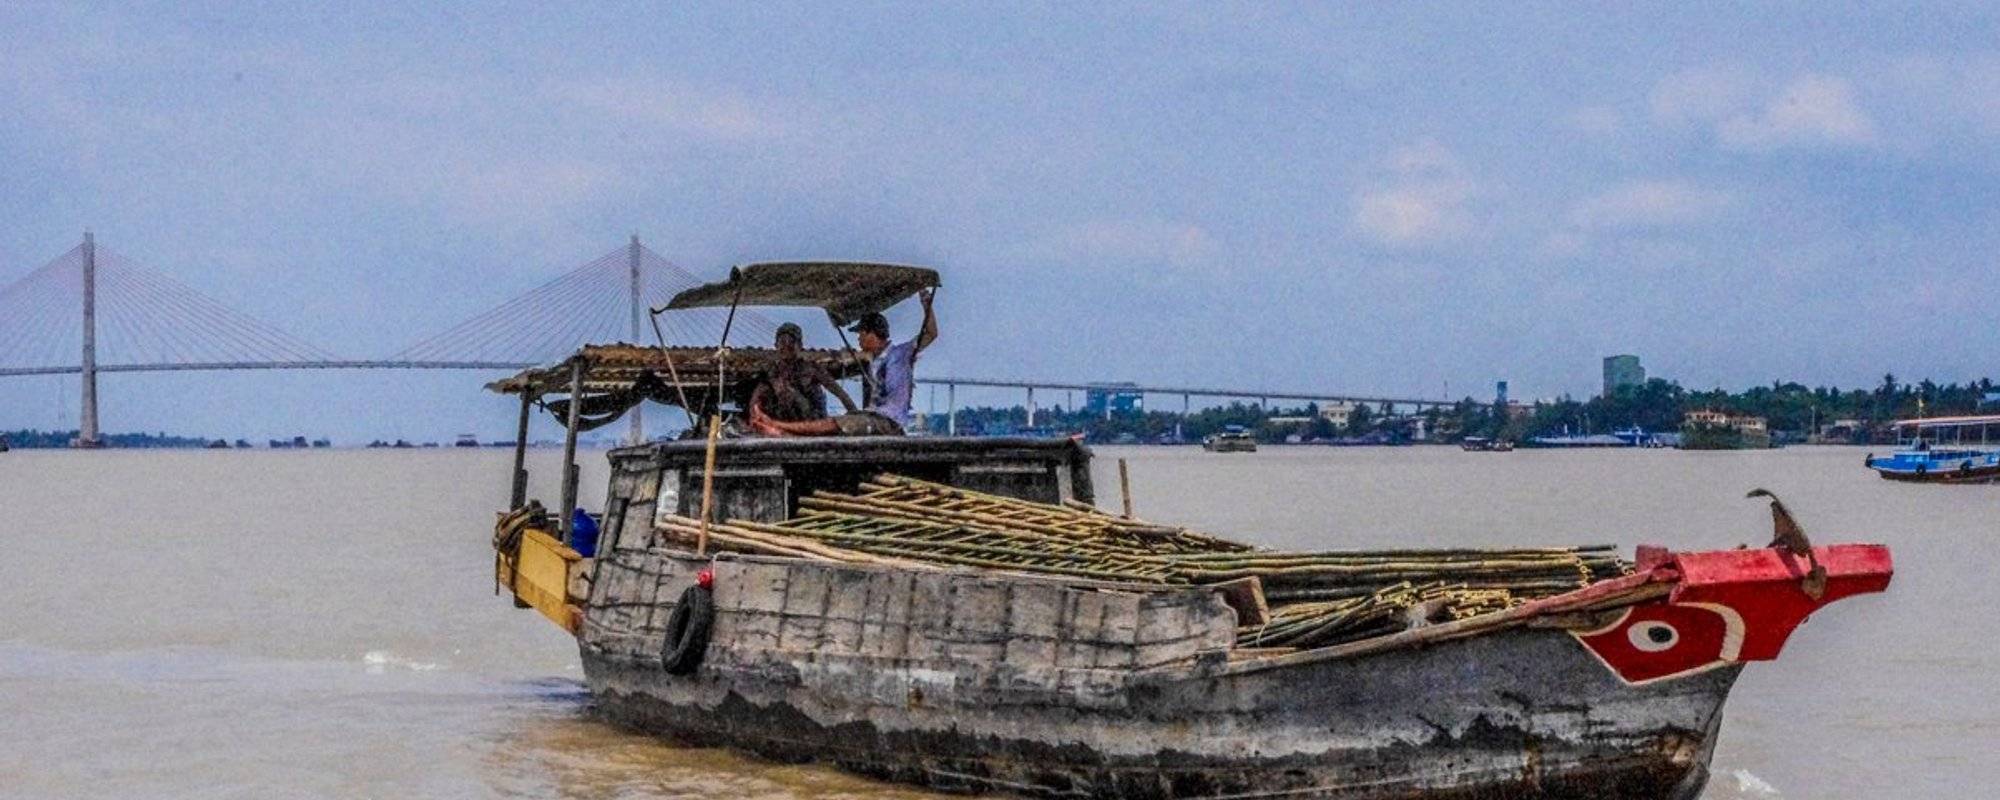 Mekong Delta, Vietnam - Saigon to Phnom Penh in three days